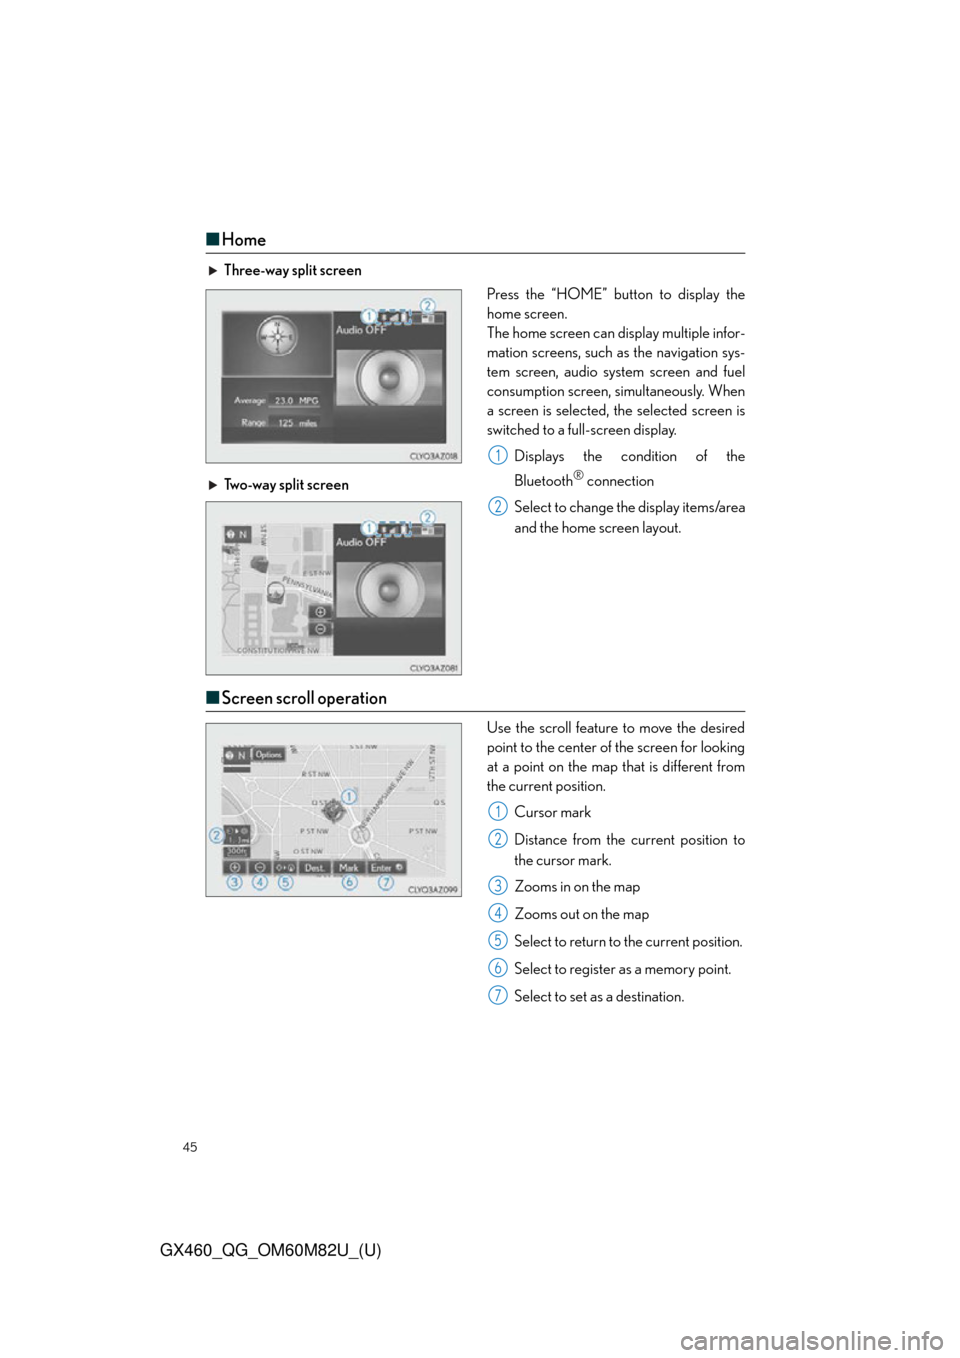 Lexus GX460 2016  Multimedia Manual / 45
GX460_QG_OM60M82U_(U)
■Home
Three-way split screen
Press the “HOME” button to display the
home screen.
The home screen can display multiple infor-
mation screens, such as the navigation sys-
